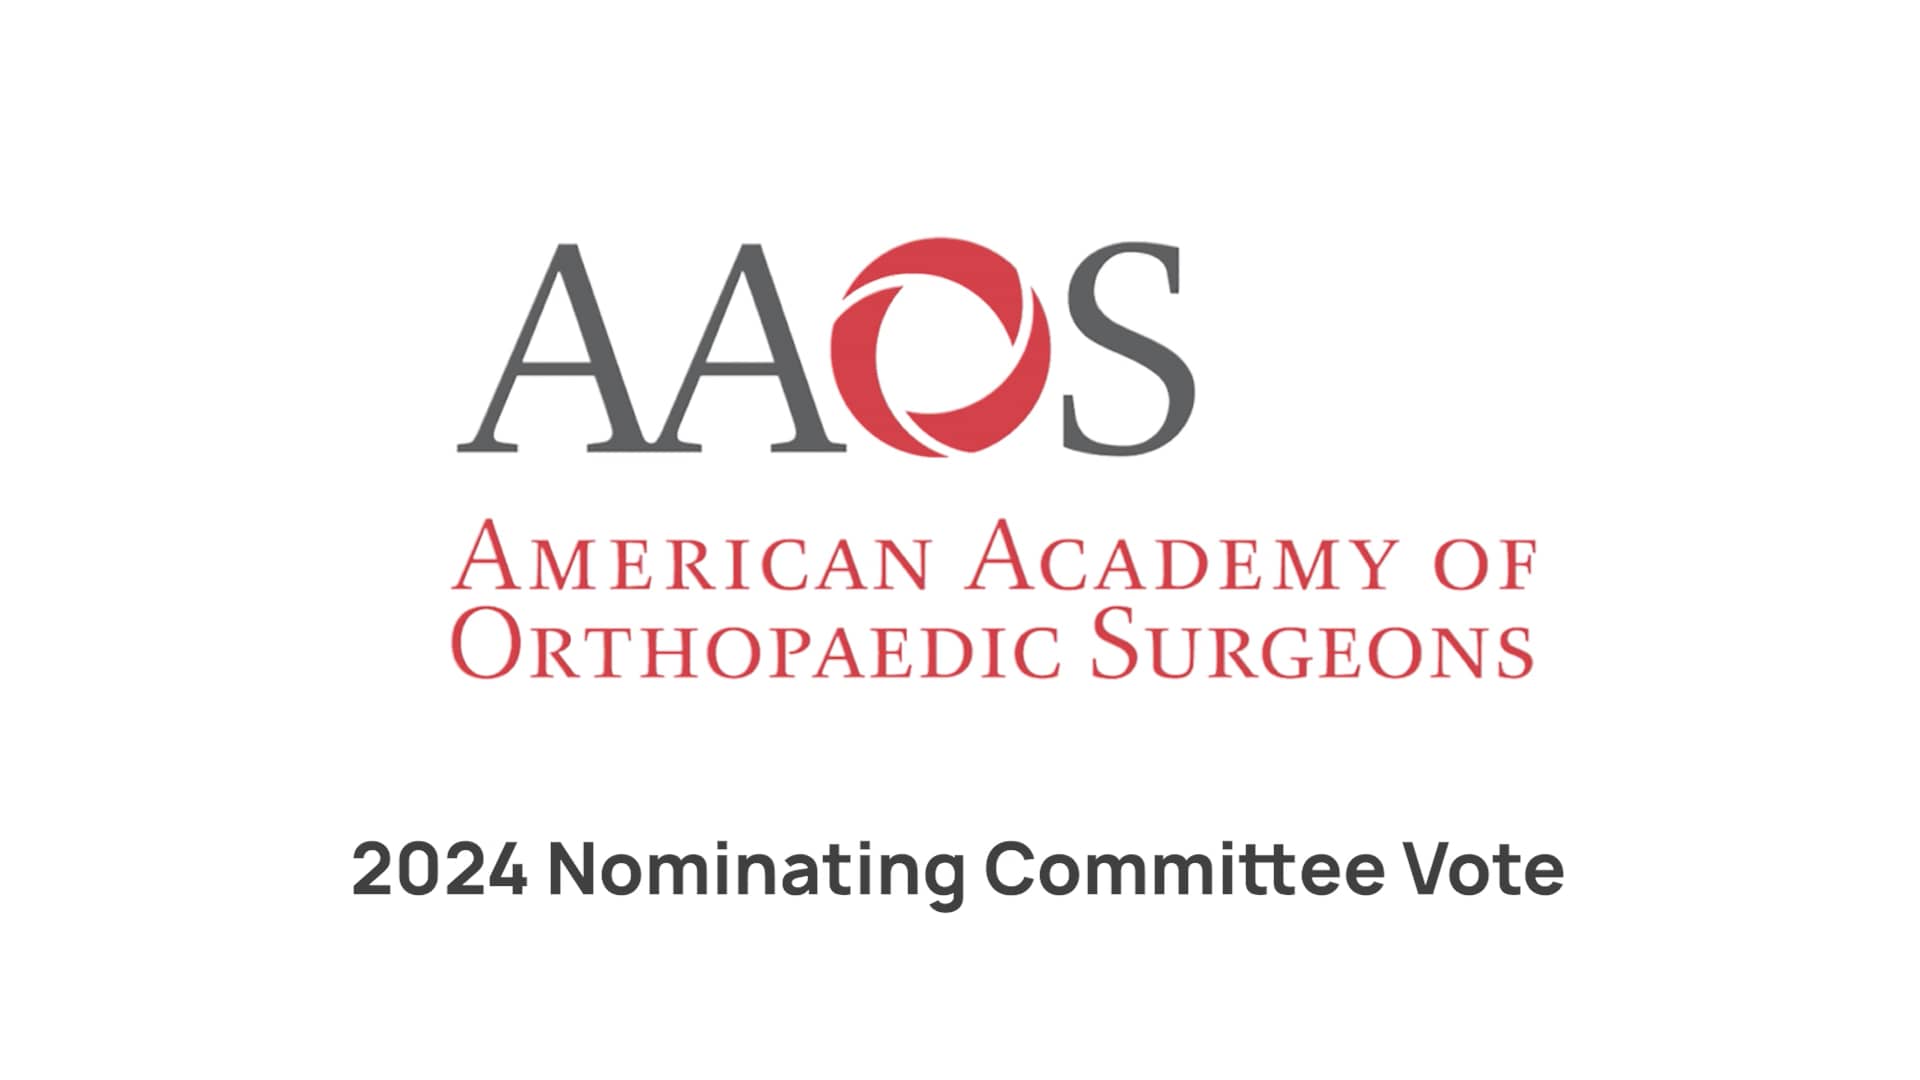 AAOS 2024 Nominating Committee Vote on Vimeo